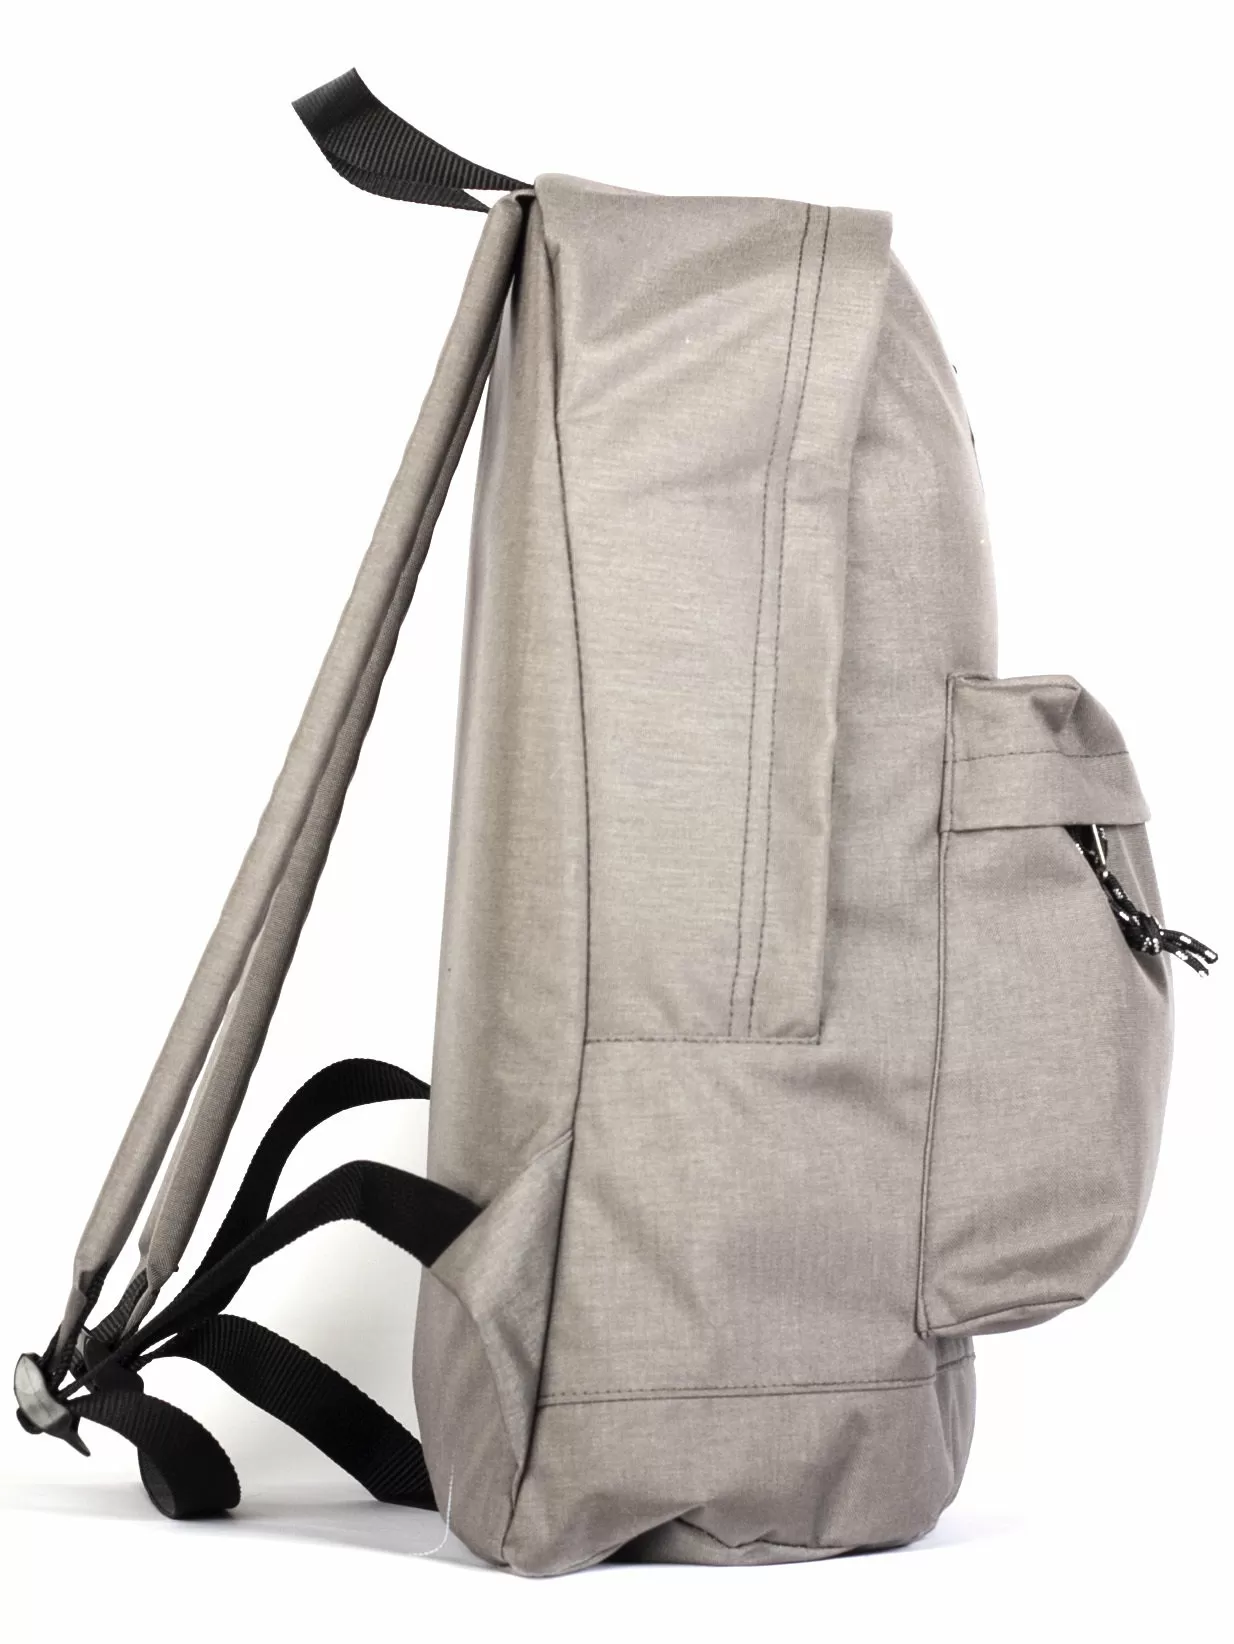 Рюкзак Daypack m стальной серый